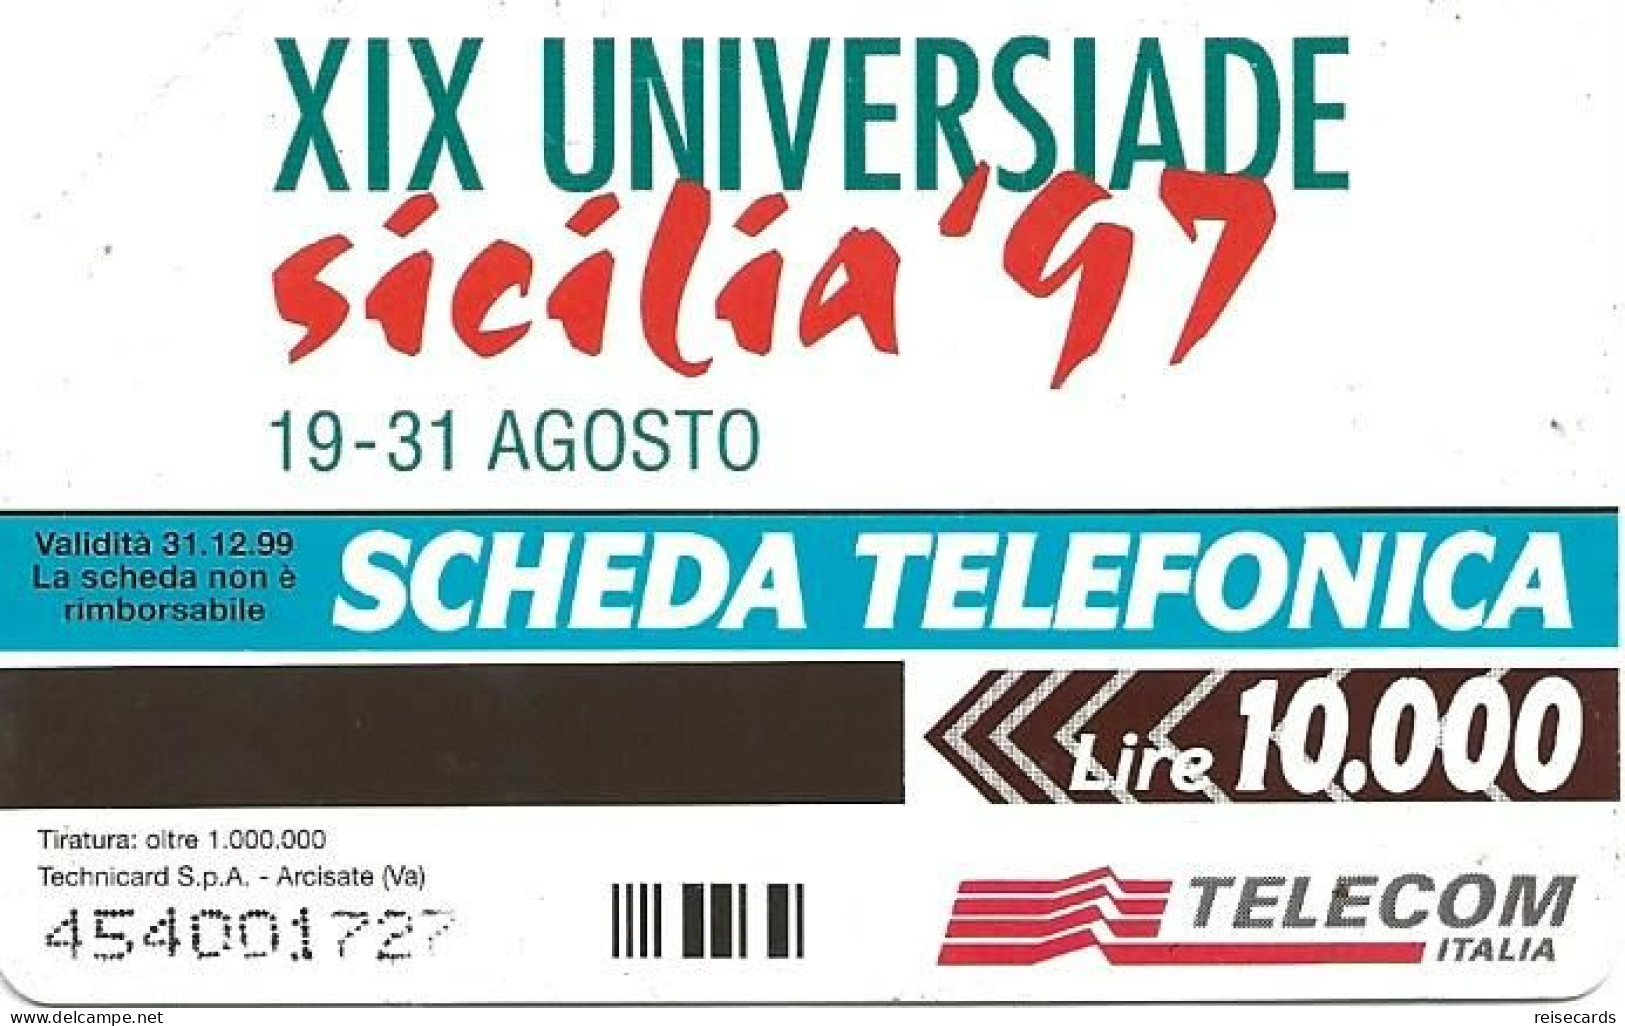 Italy: Telecom Italia - XIX Universiade Sicilia '97, Archimede - Public Advertising